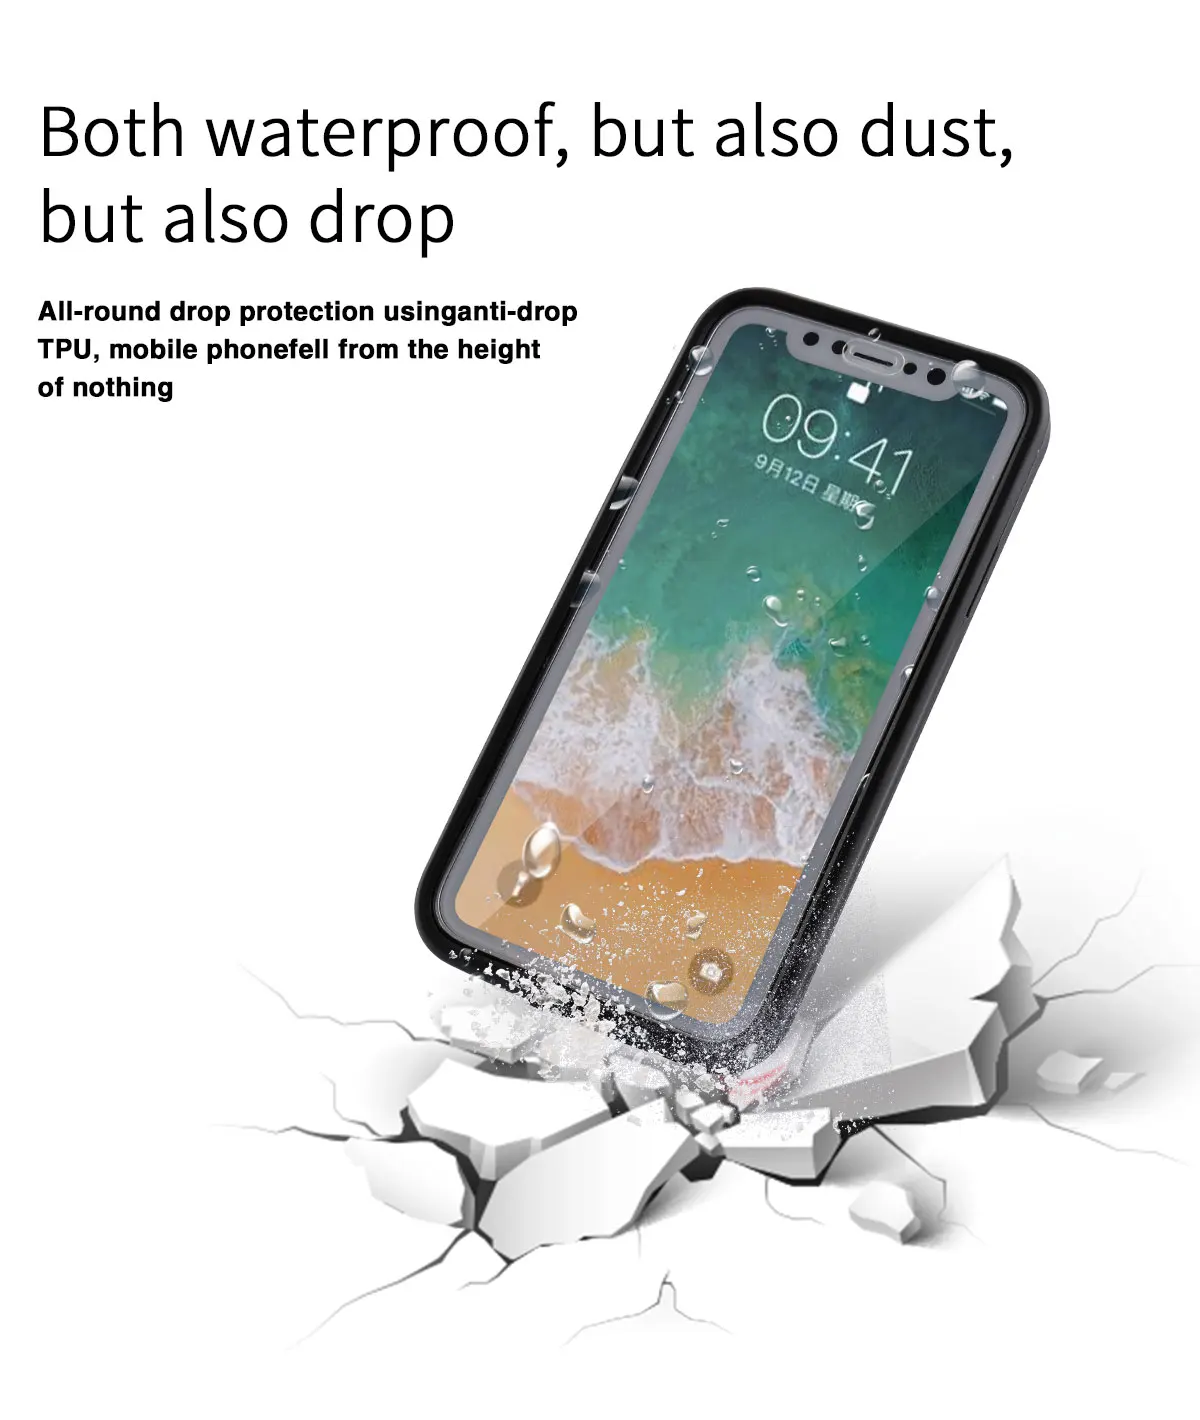 IP68 настоящий водонепроницаемый чехол для телефона для iPhone X, 8, 7 Plus, 6, 6S Plus, полная защита, чехол под водой для iPhone 5, 5S, XR, XS Max